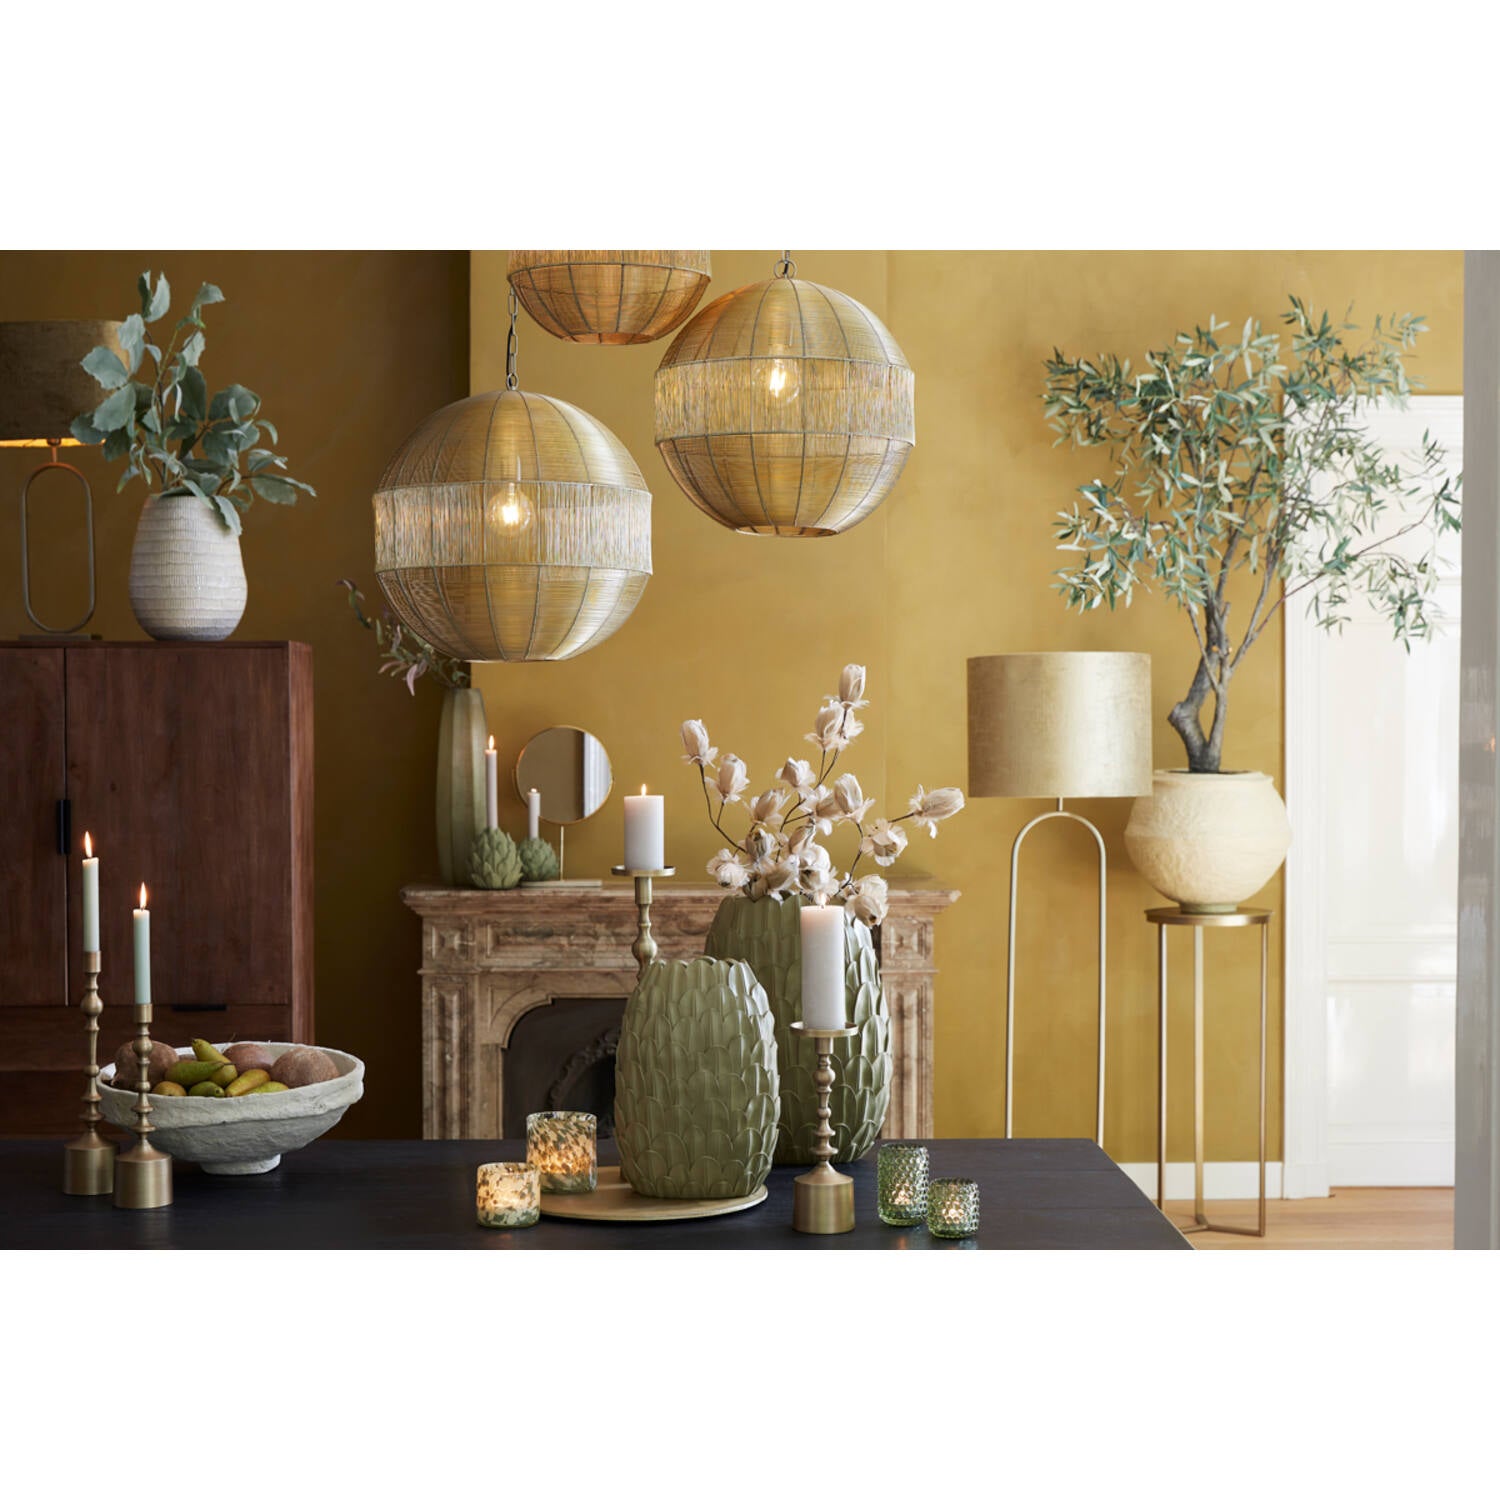 Retiro Medium Pillar Side Tables - Light Gold Finish